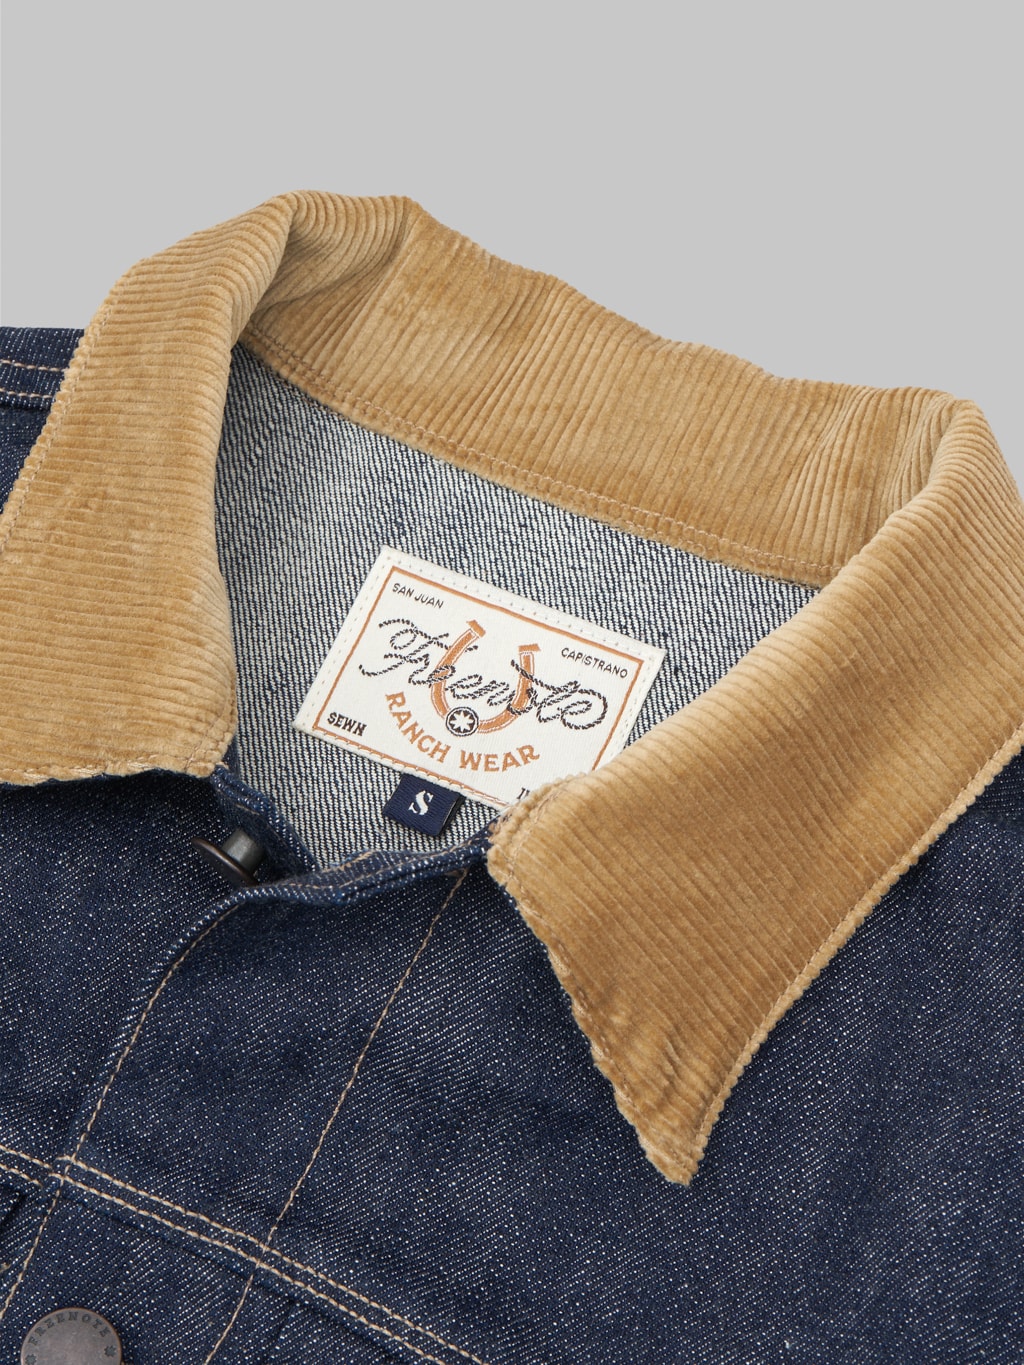 freenote cloth rj 313 ounce indigo selvedge denim jacket  corduroy collar soft